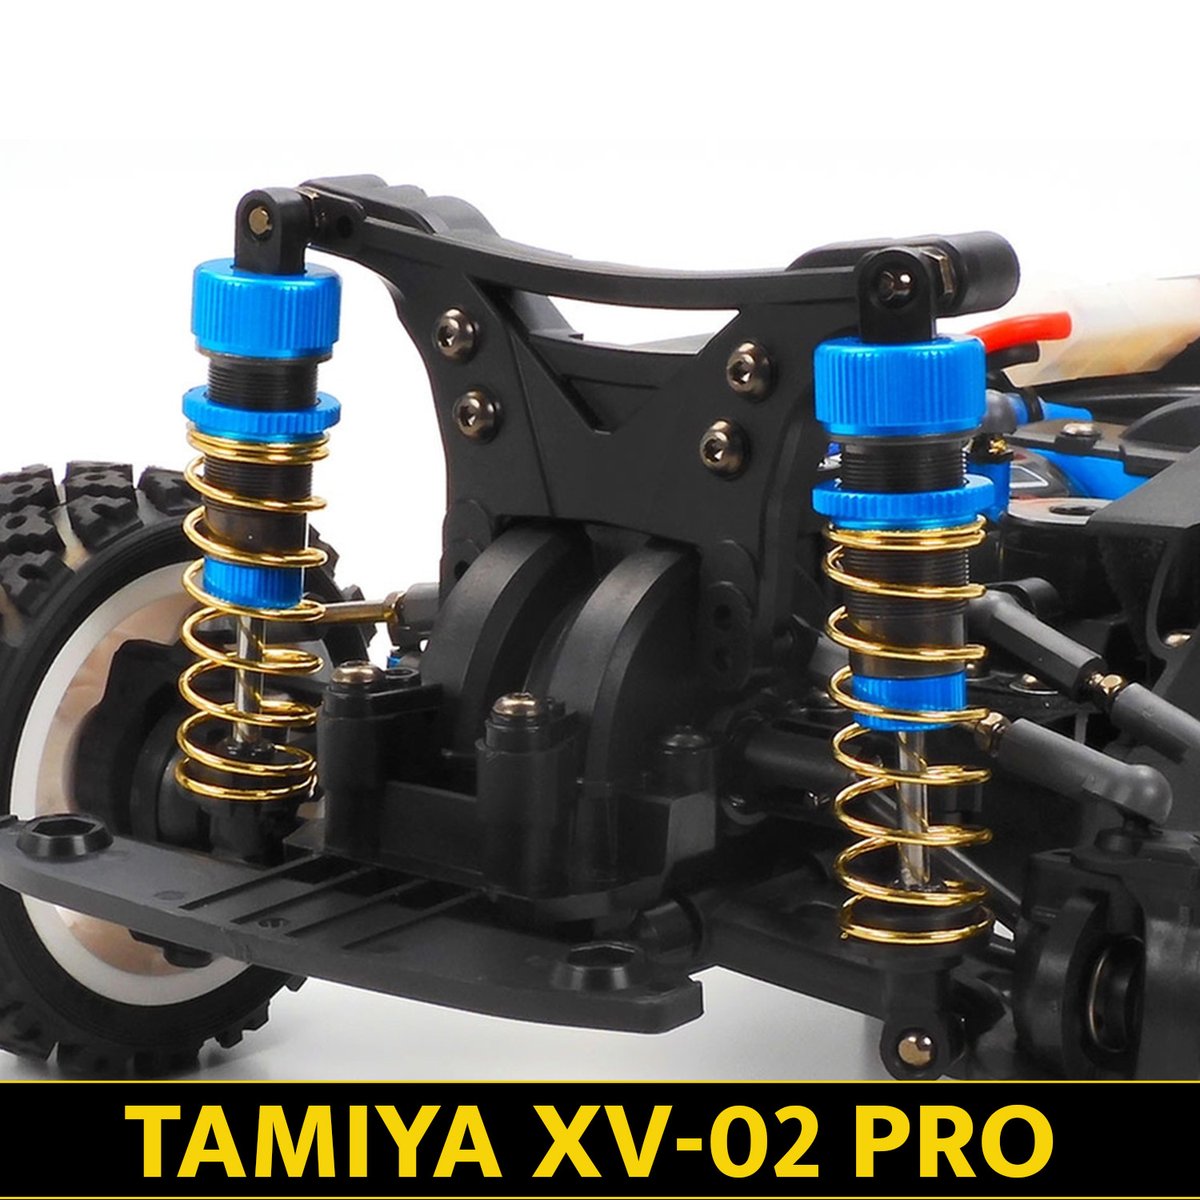 Tamiya 1:10 RC XV-02 PRO Chassis Kit